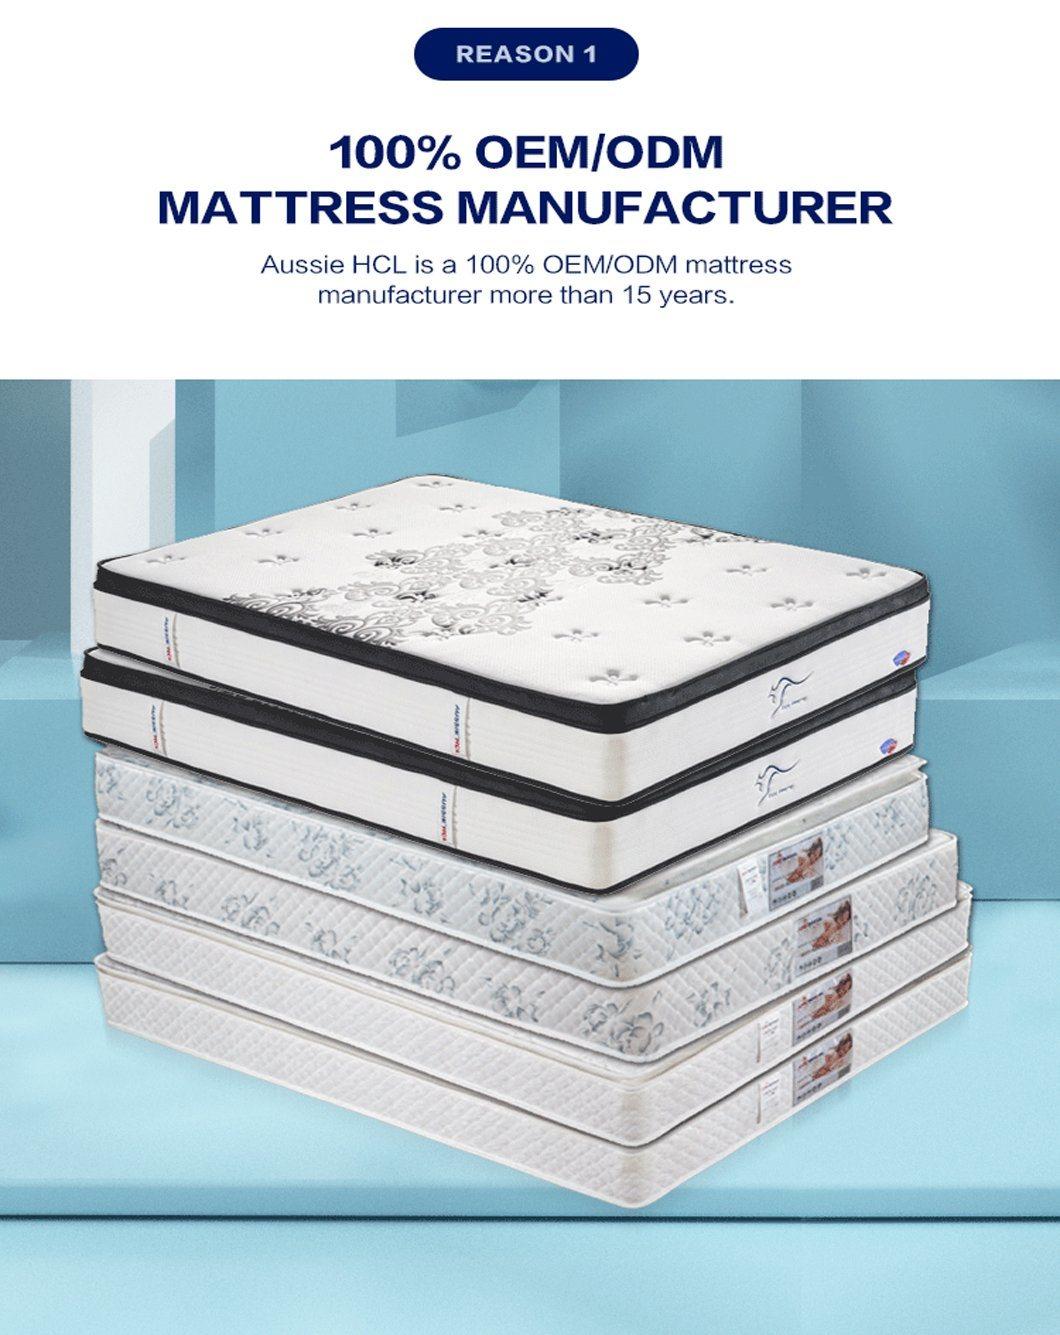 The Best Factory Aussie Quality Sleep Well King Queen Full Size Memory Gel Foam Bonnell Spring Mattress in a Box